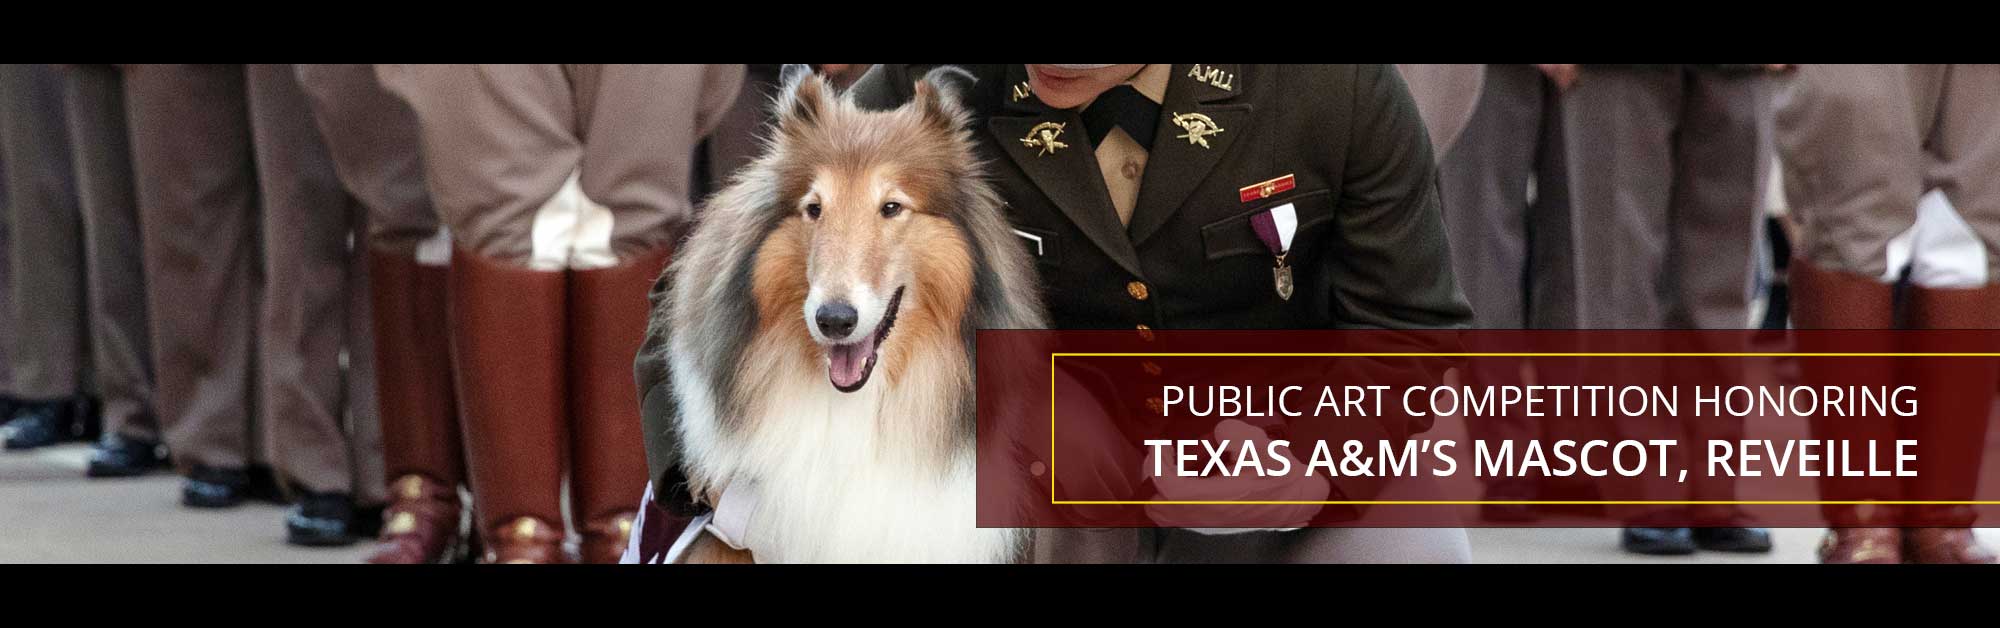 Public Art Competition Honoring Texas A&M University’s Mascot, Reveille